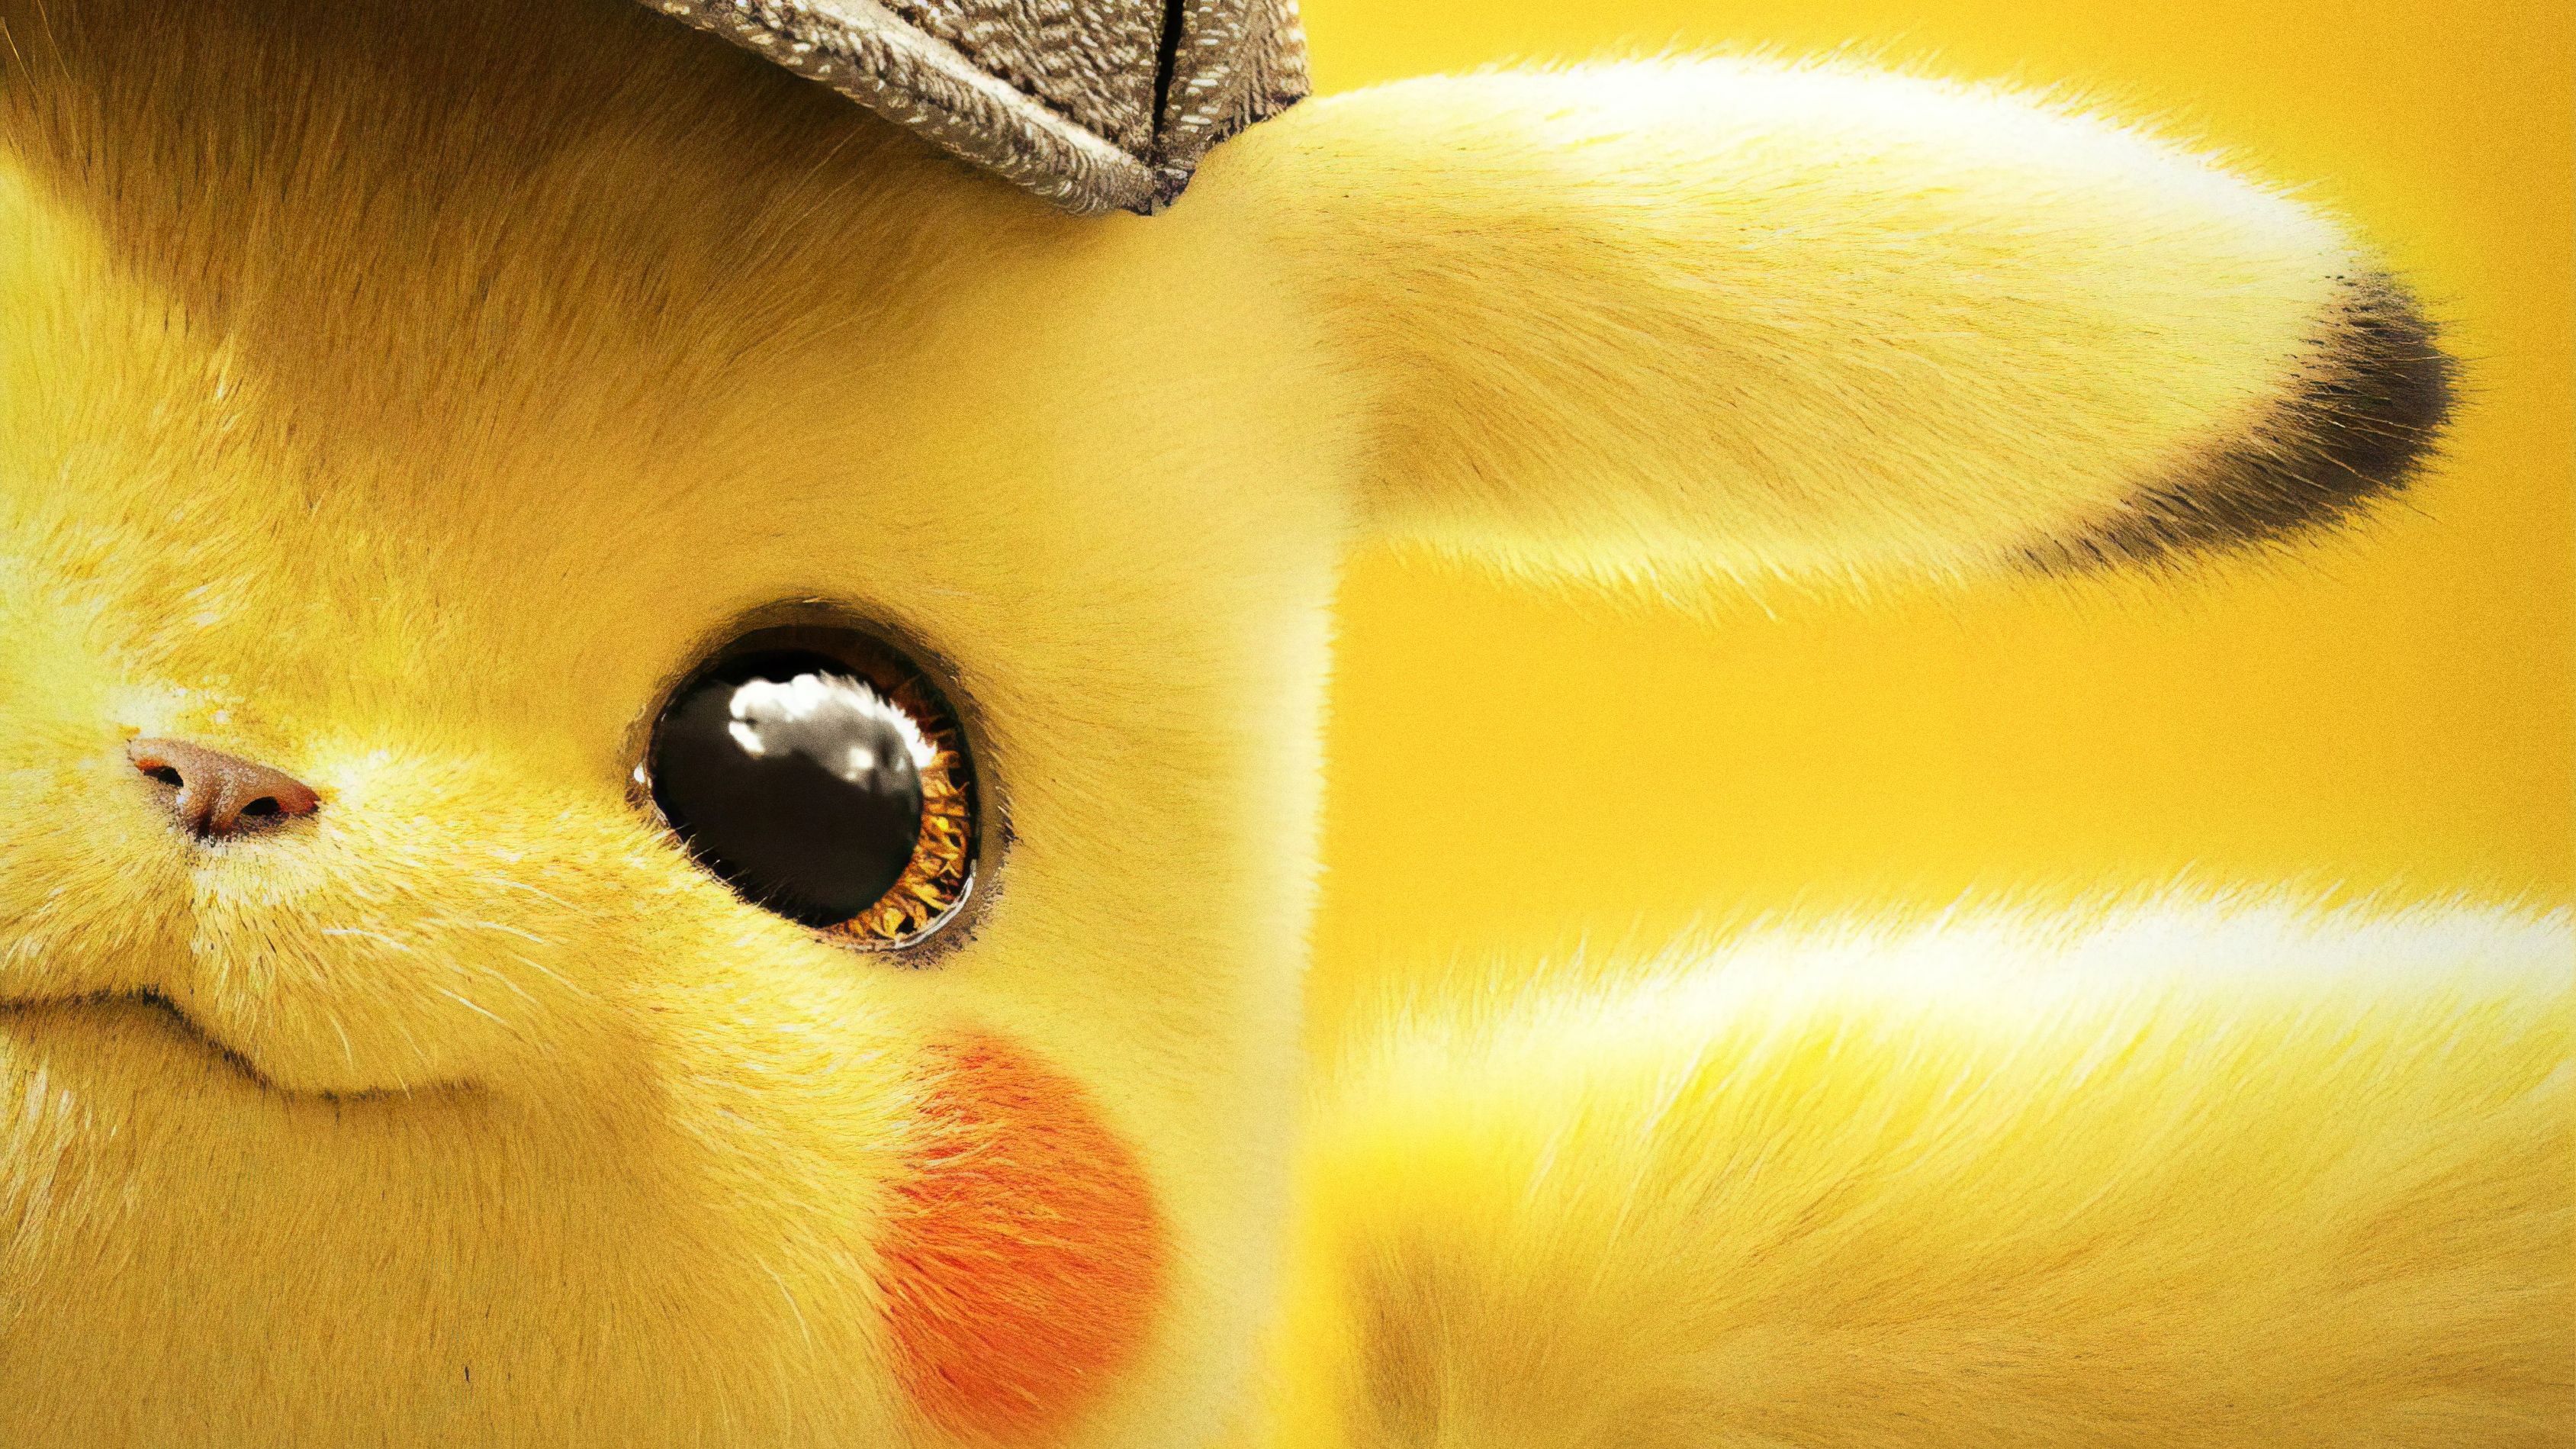 Pikachu HD Wallpapers Free download 